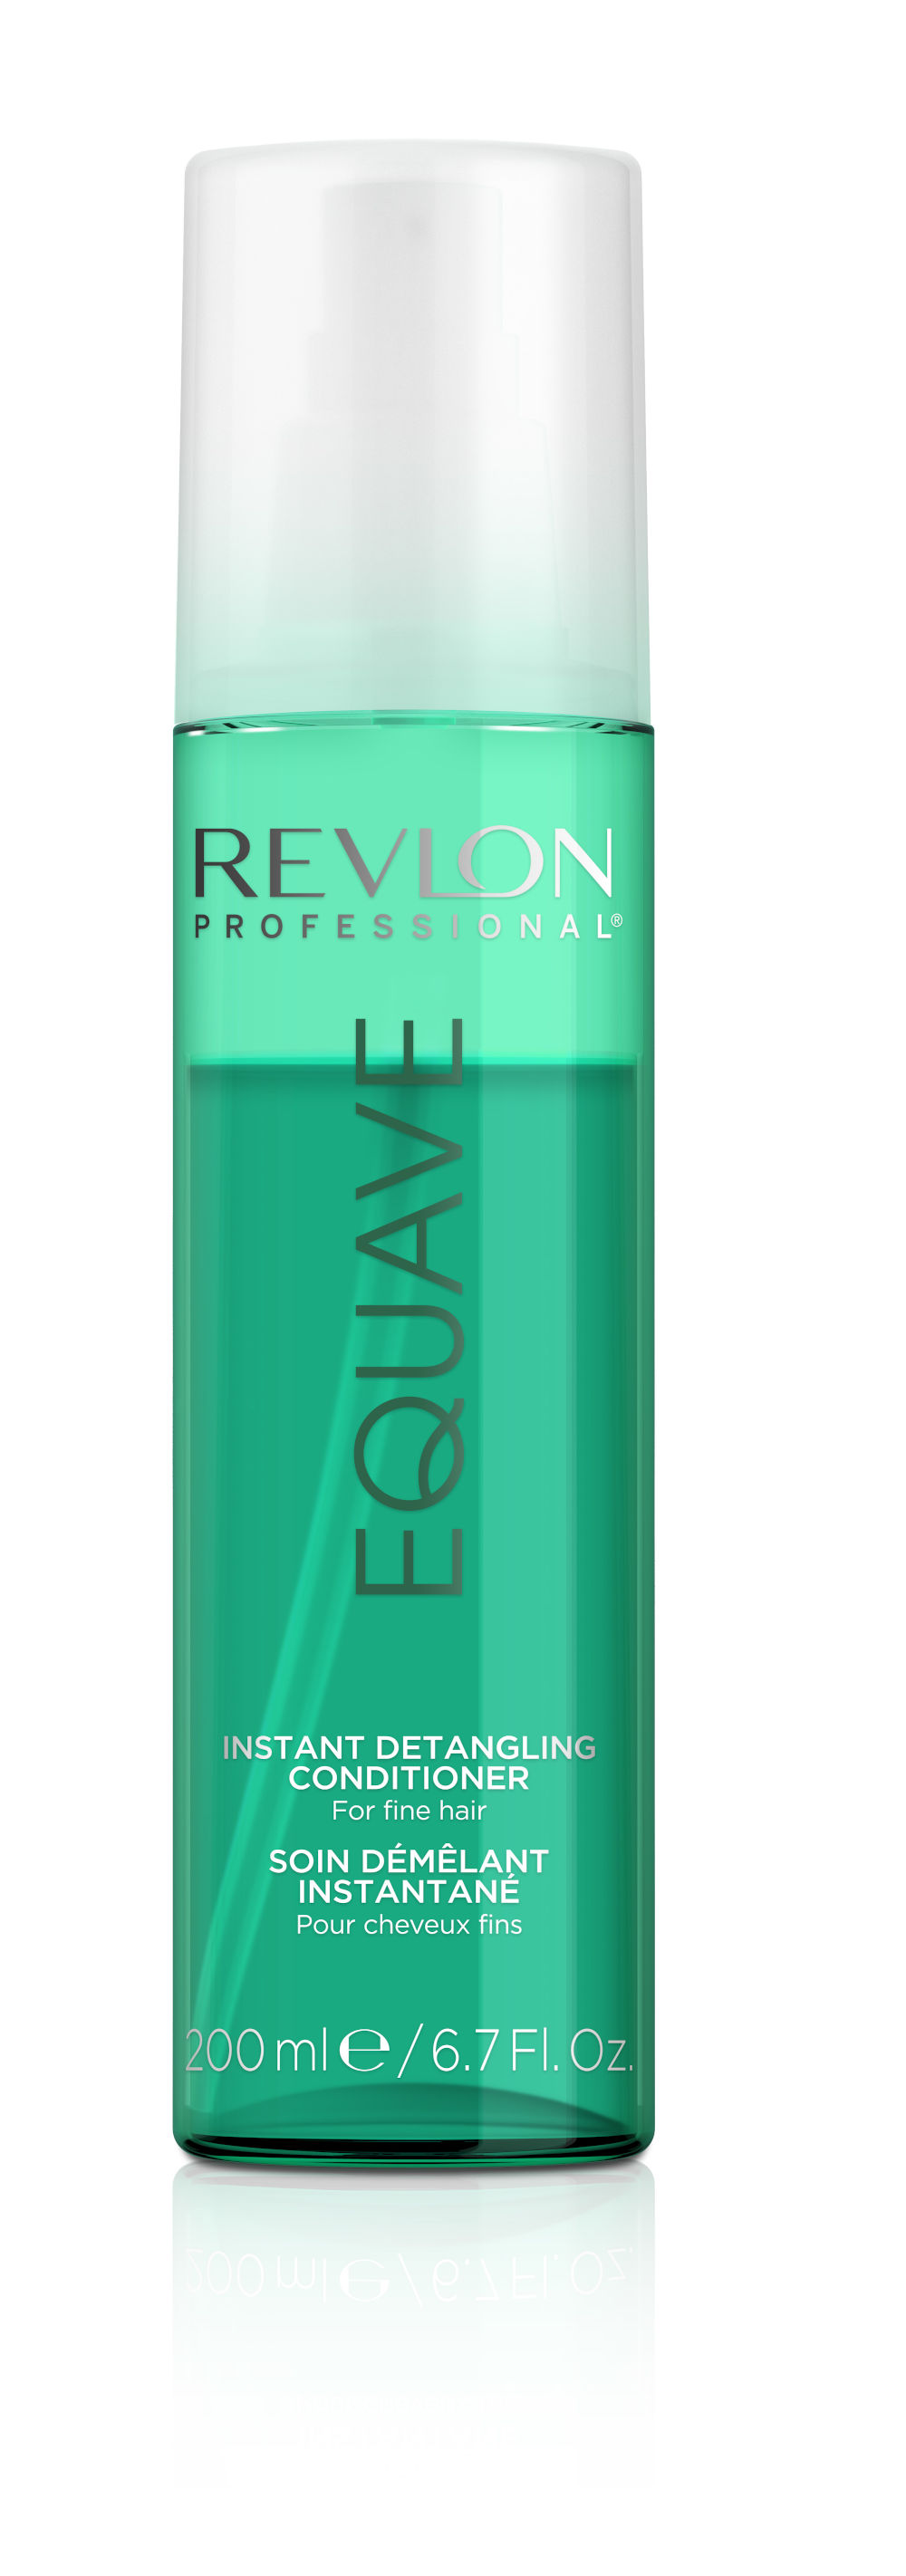 Revlon Equave Volume Detangling Conditoner | Klier Hair Online Shop